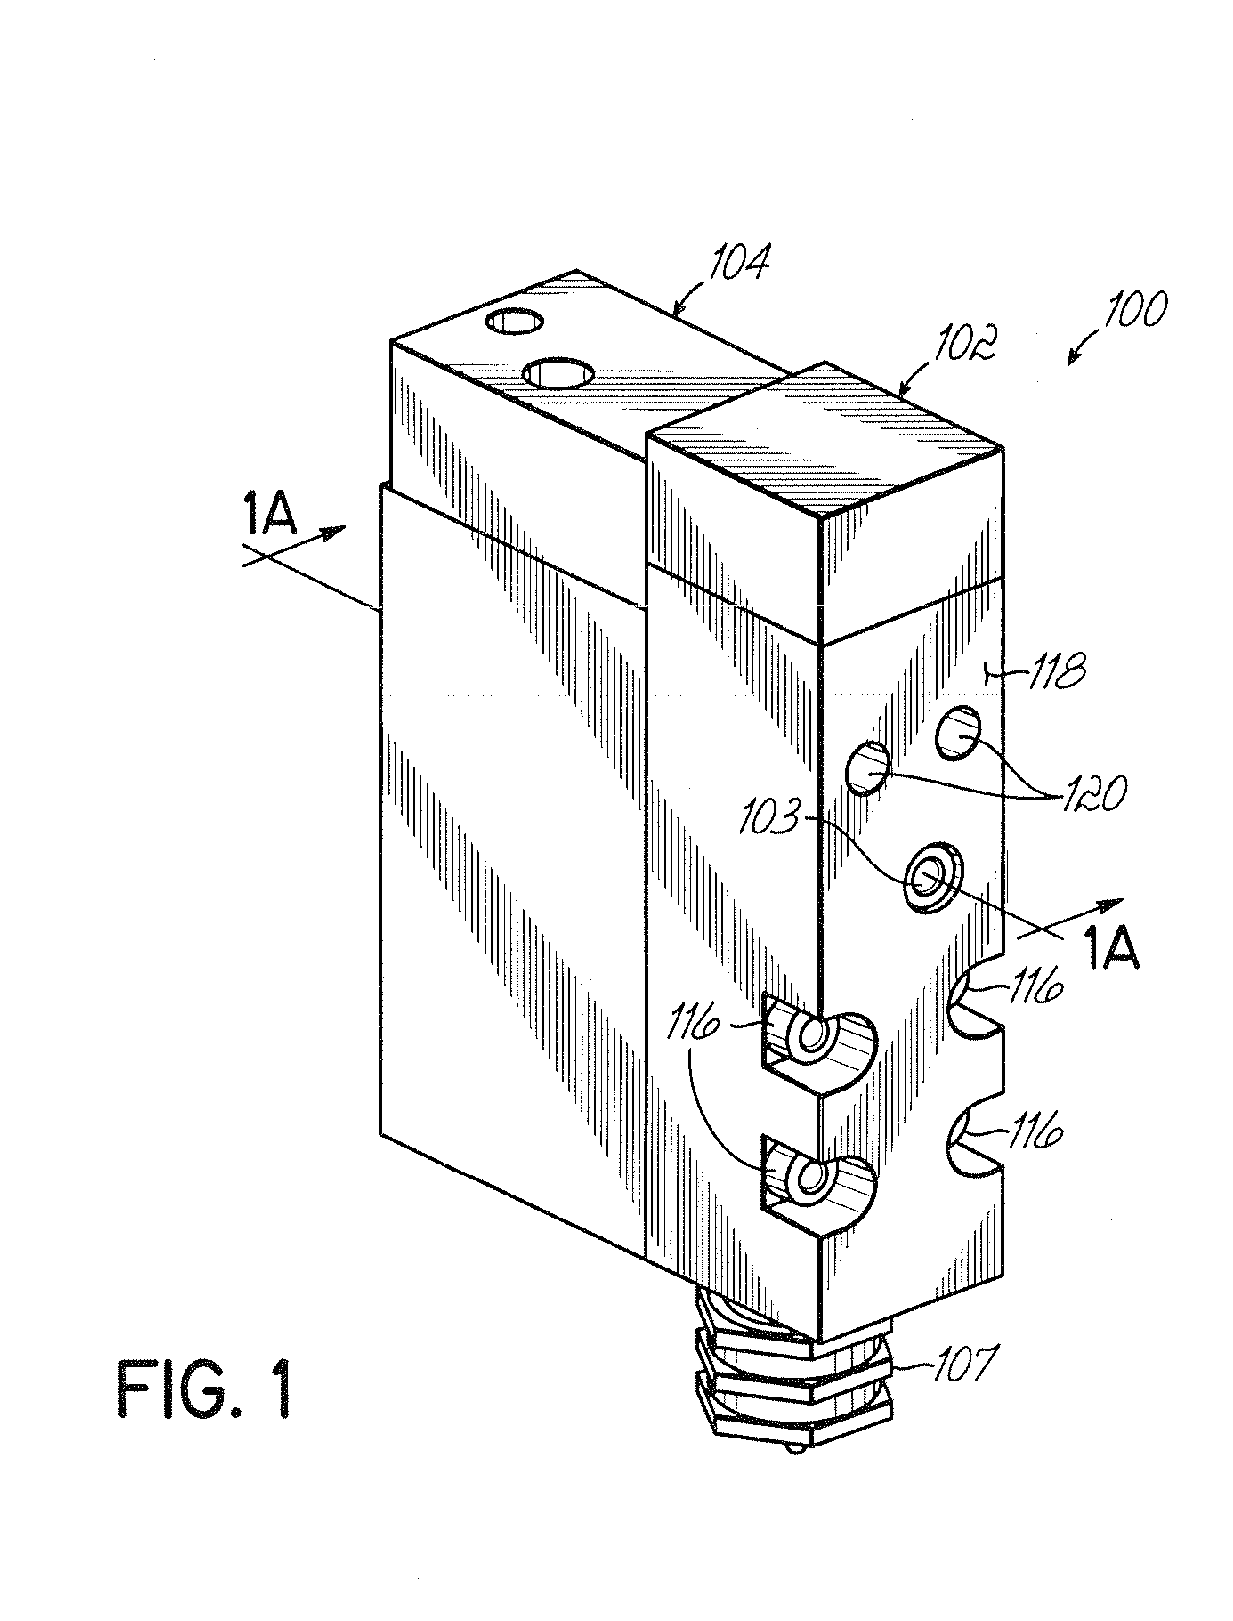 A dispenser having a pivoting actuator assembly